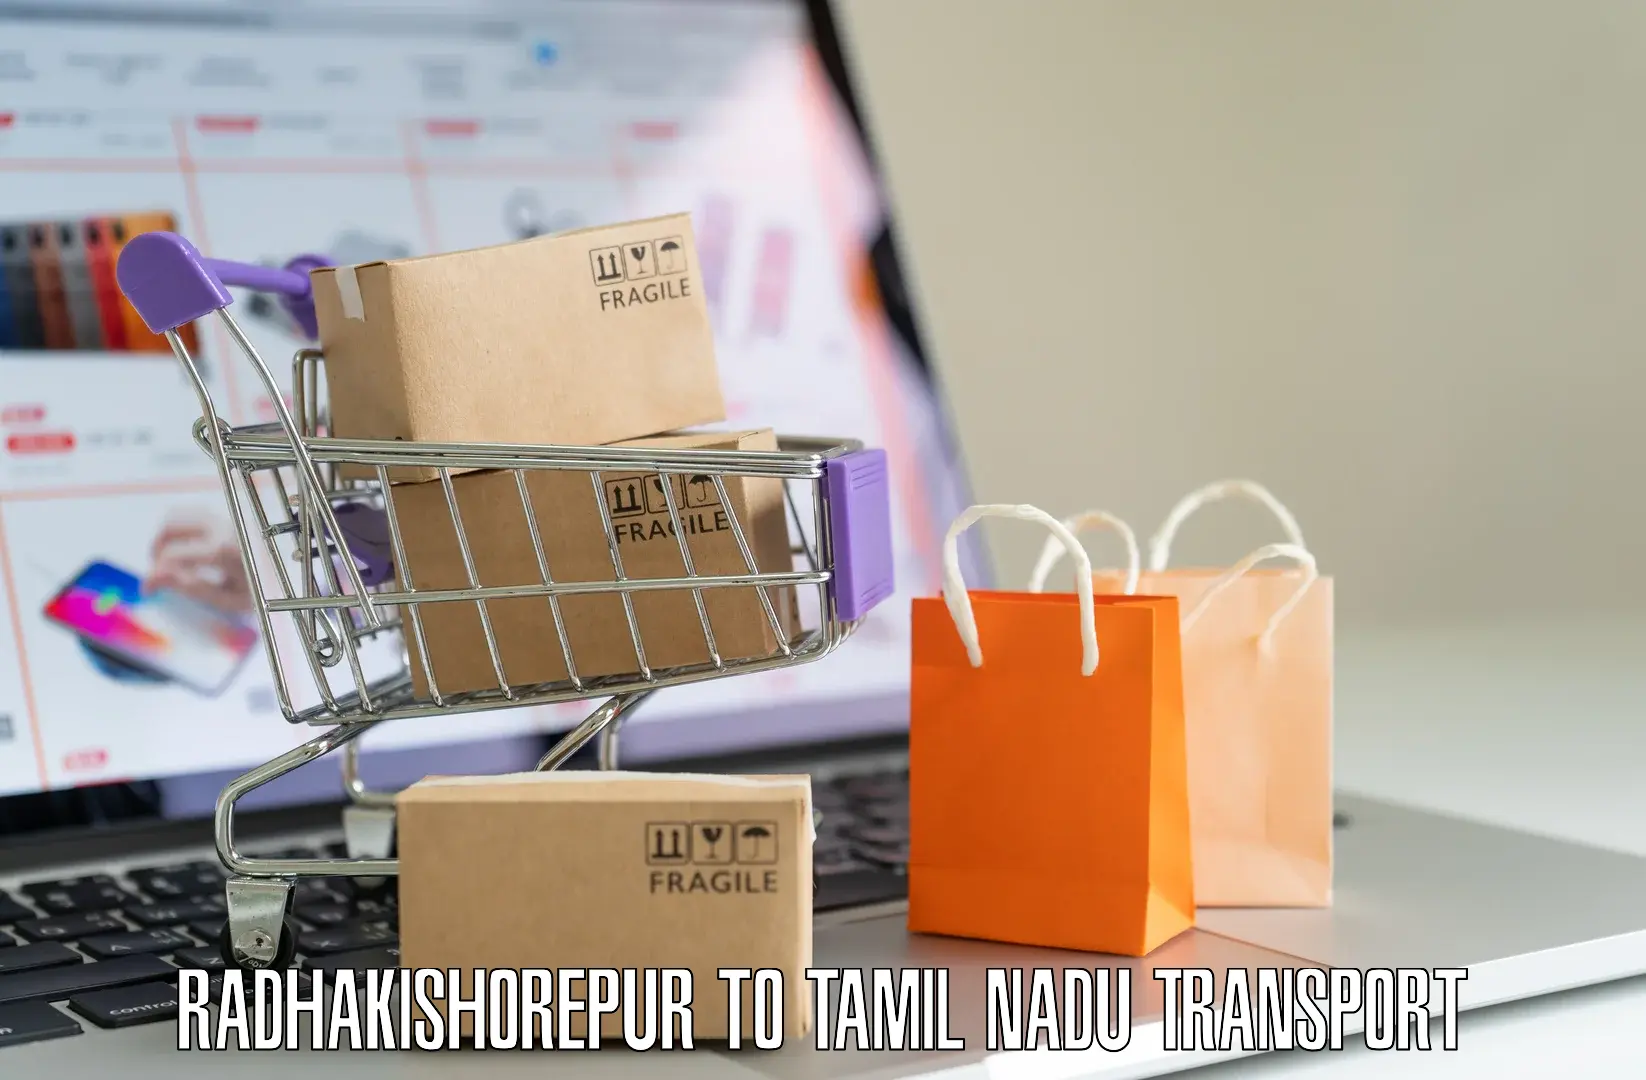 Shipping partner Radhakishorepur to Tamil Nadu